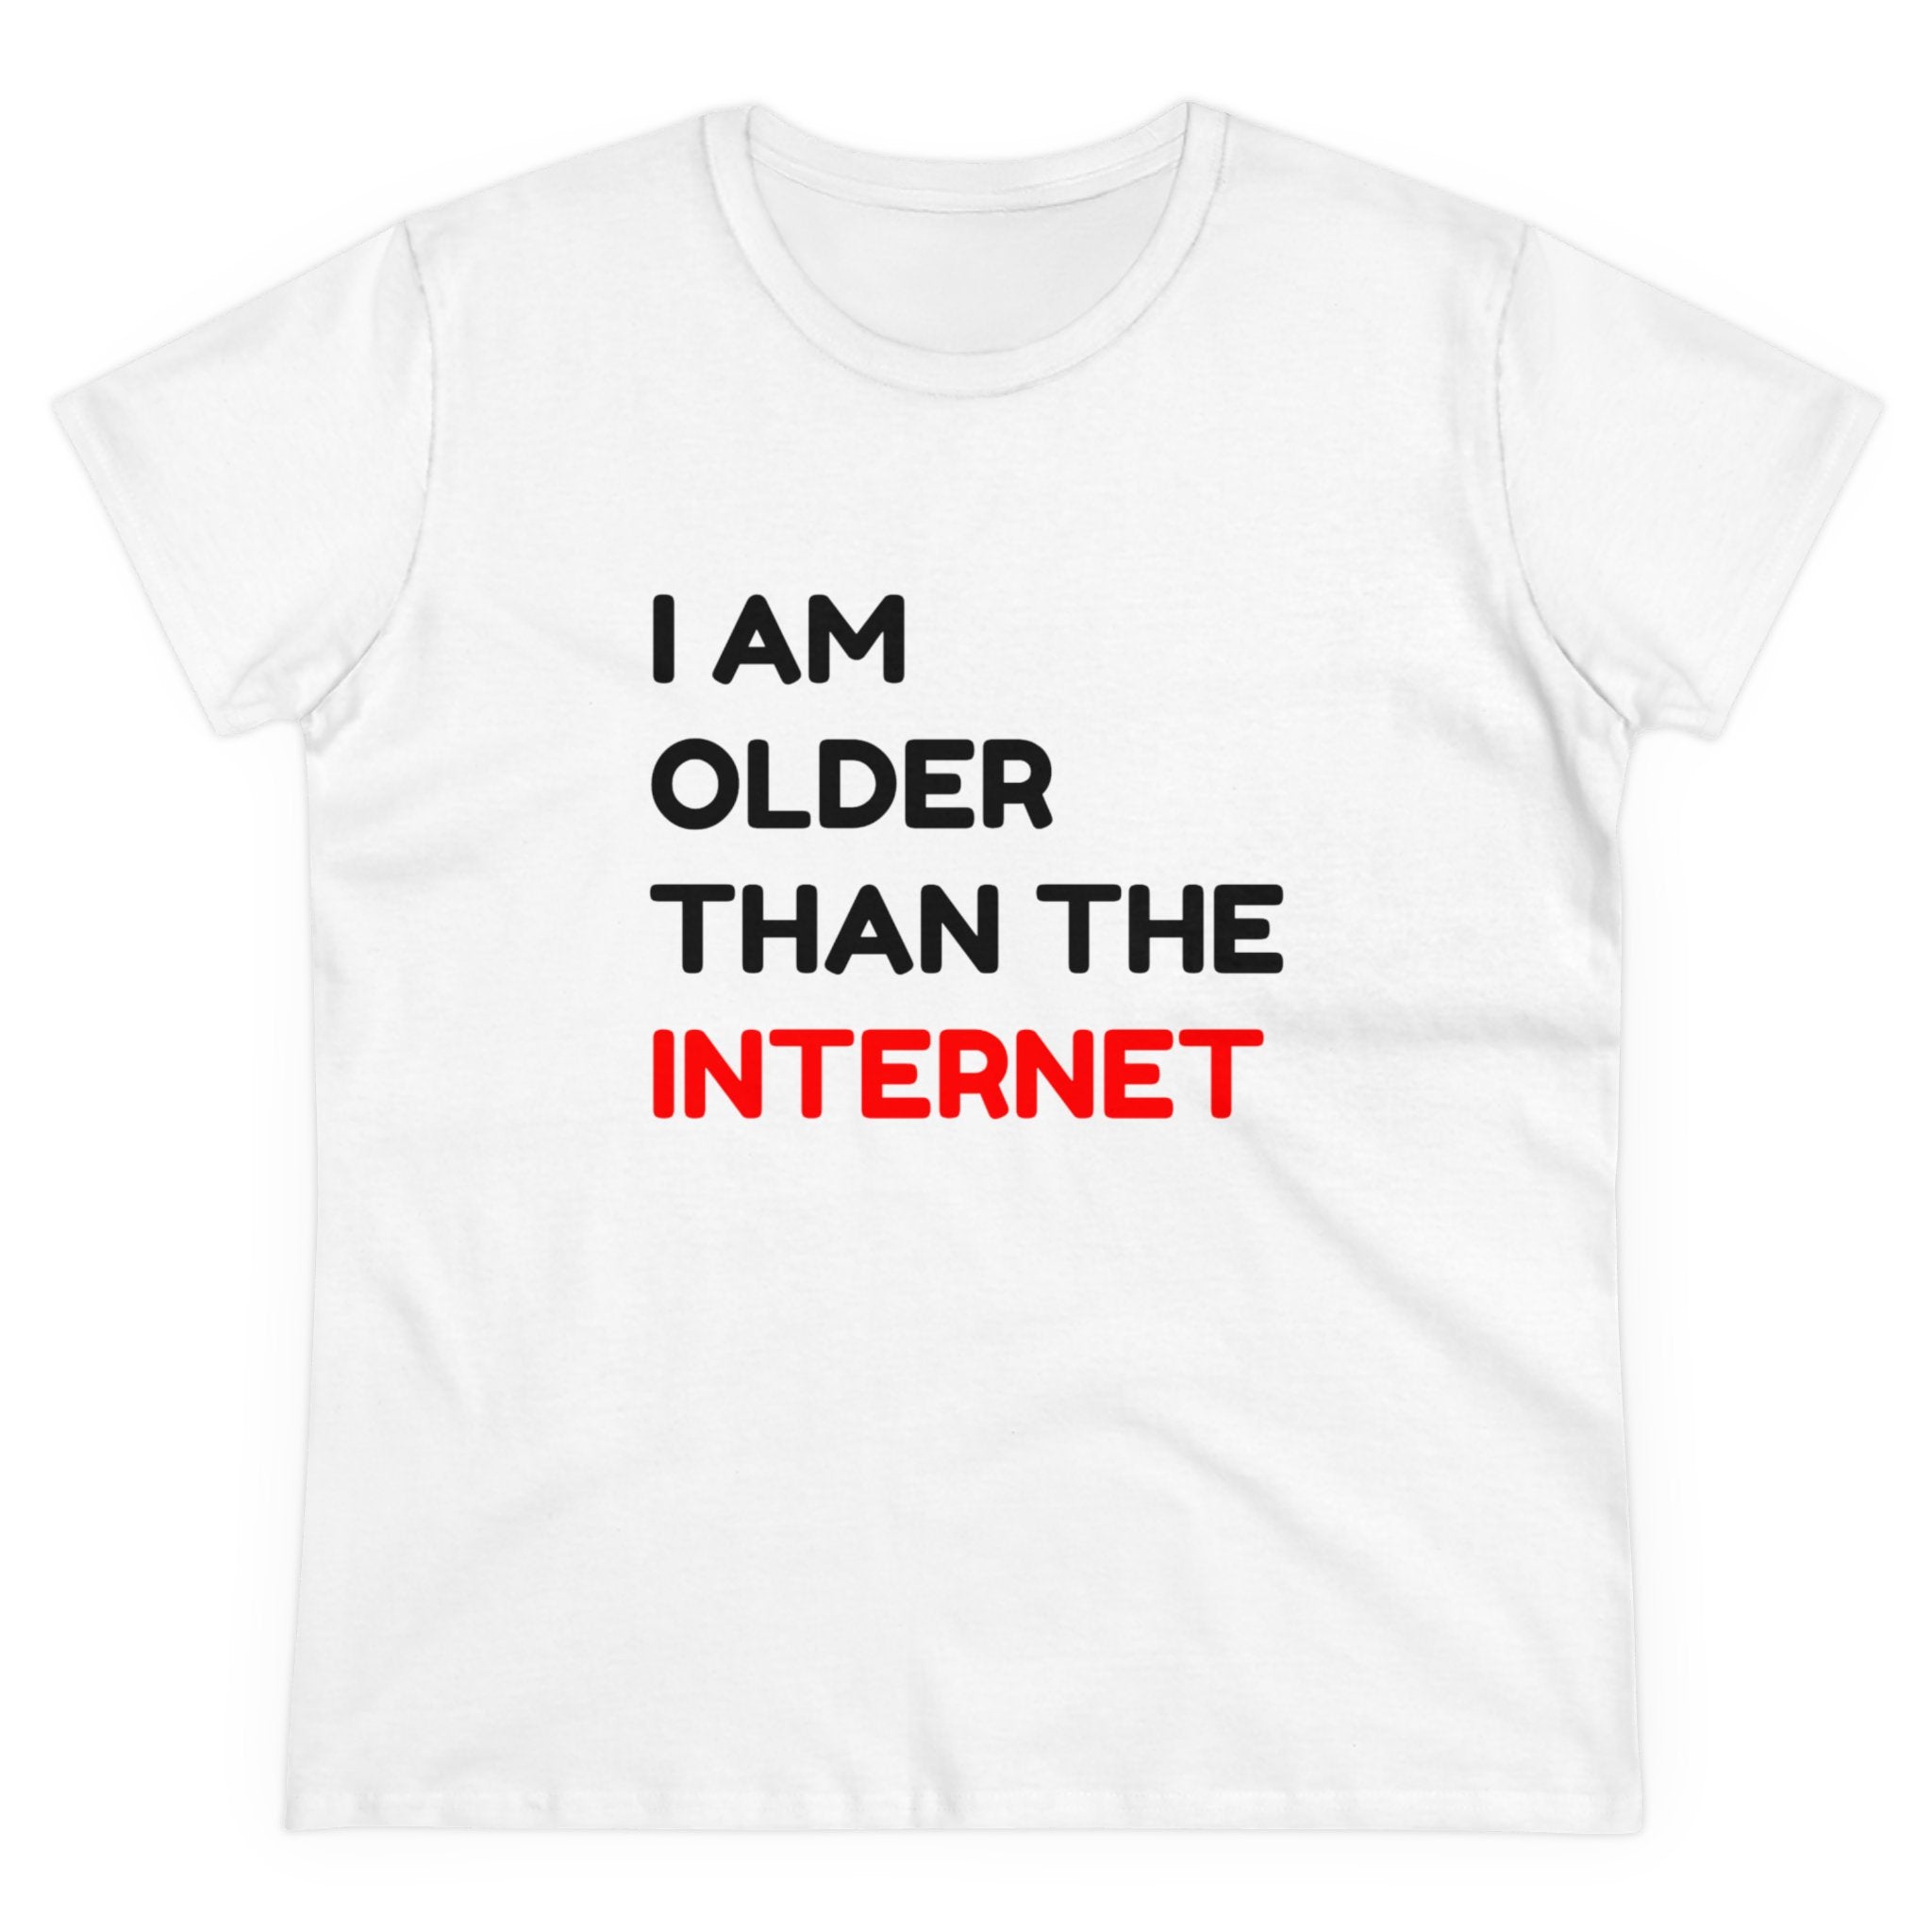 I am Older Than the Internet - Women's Tee